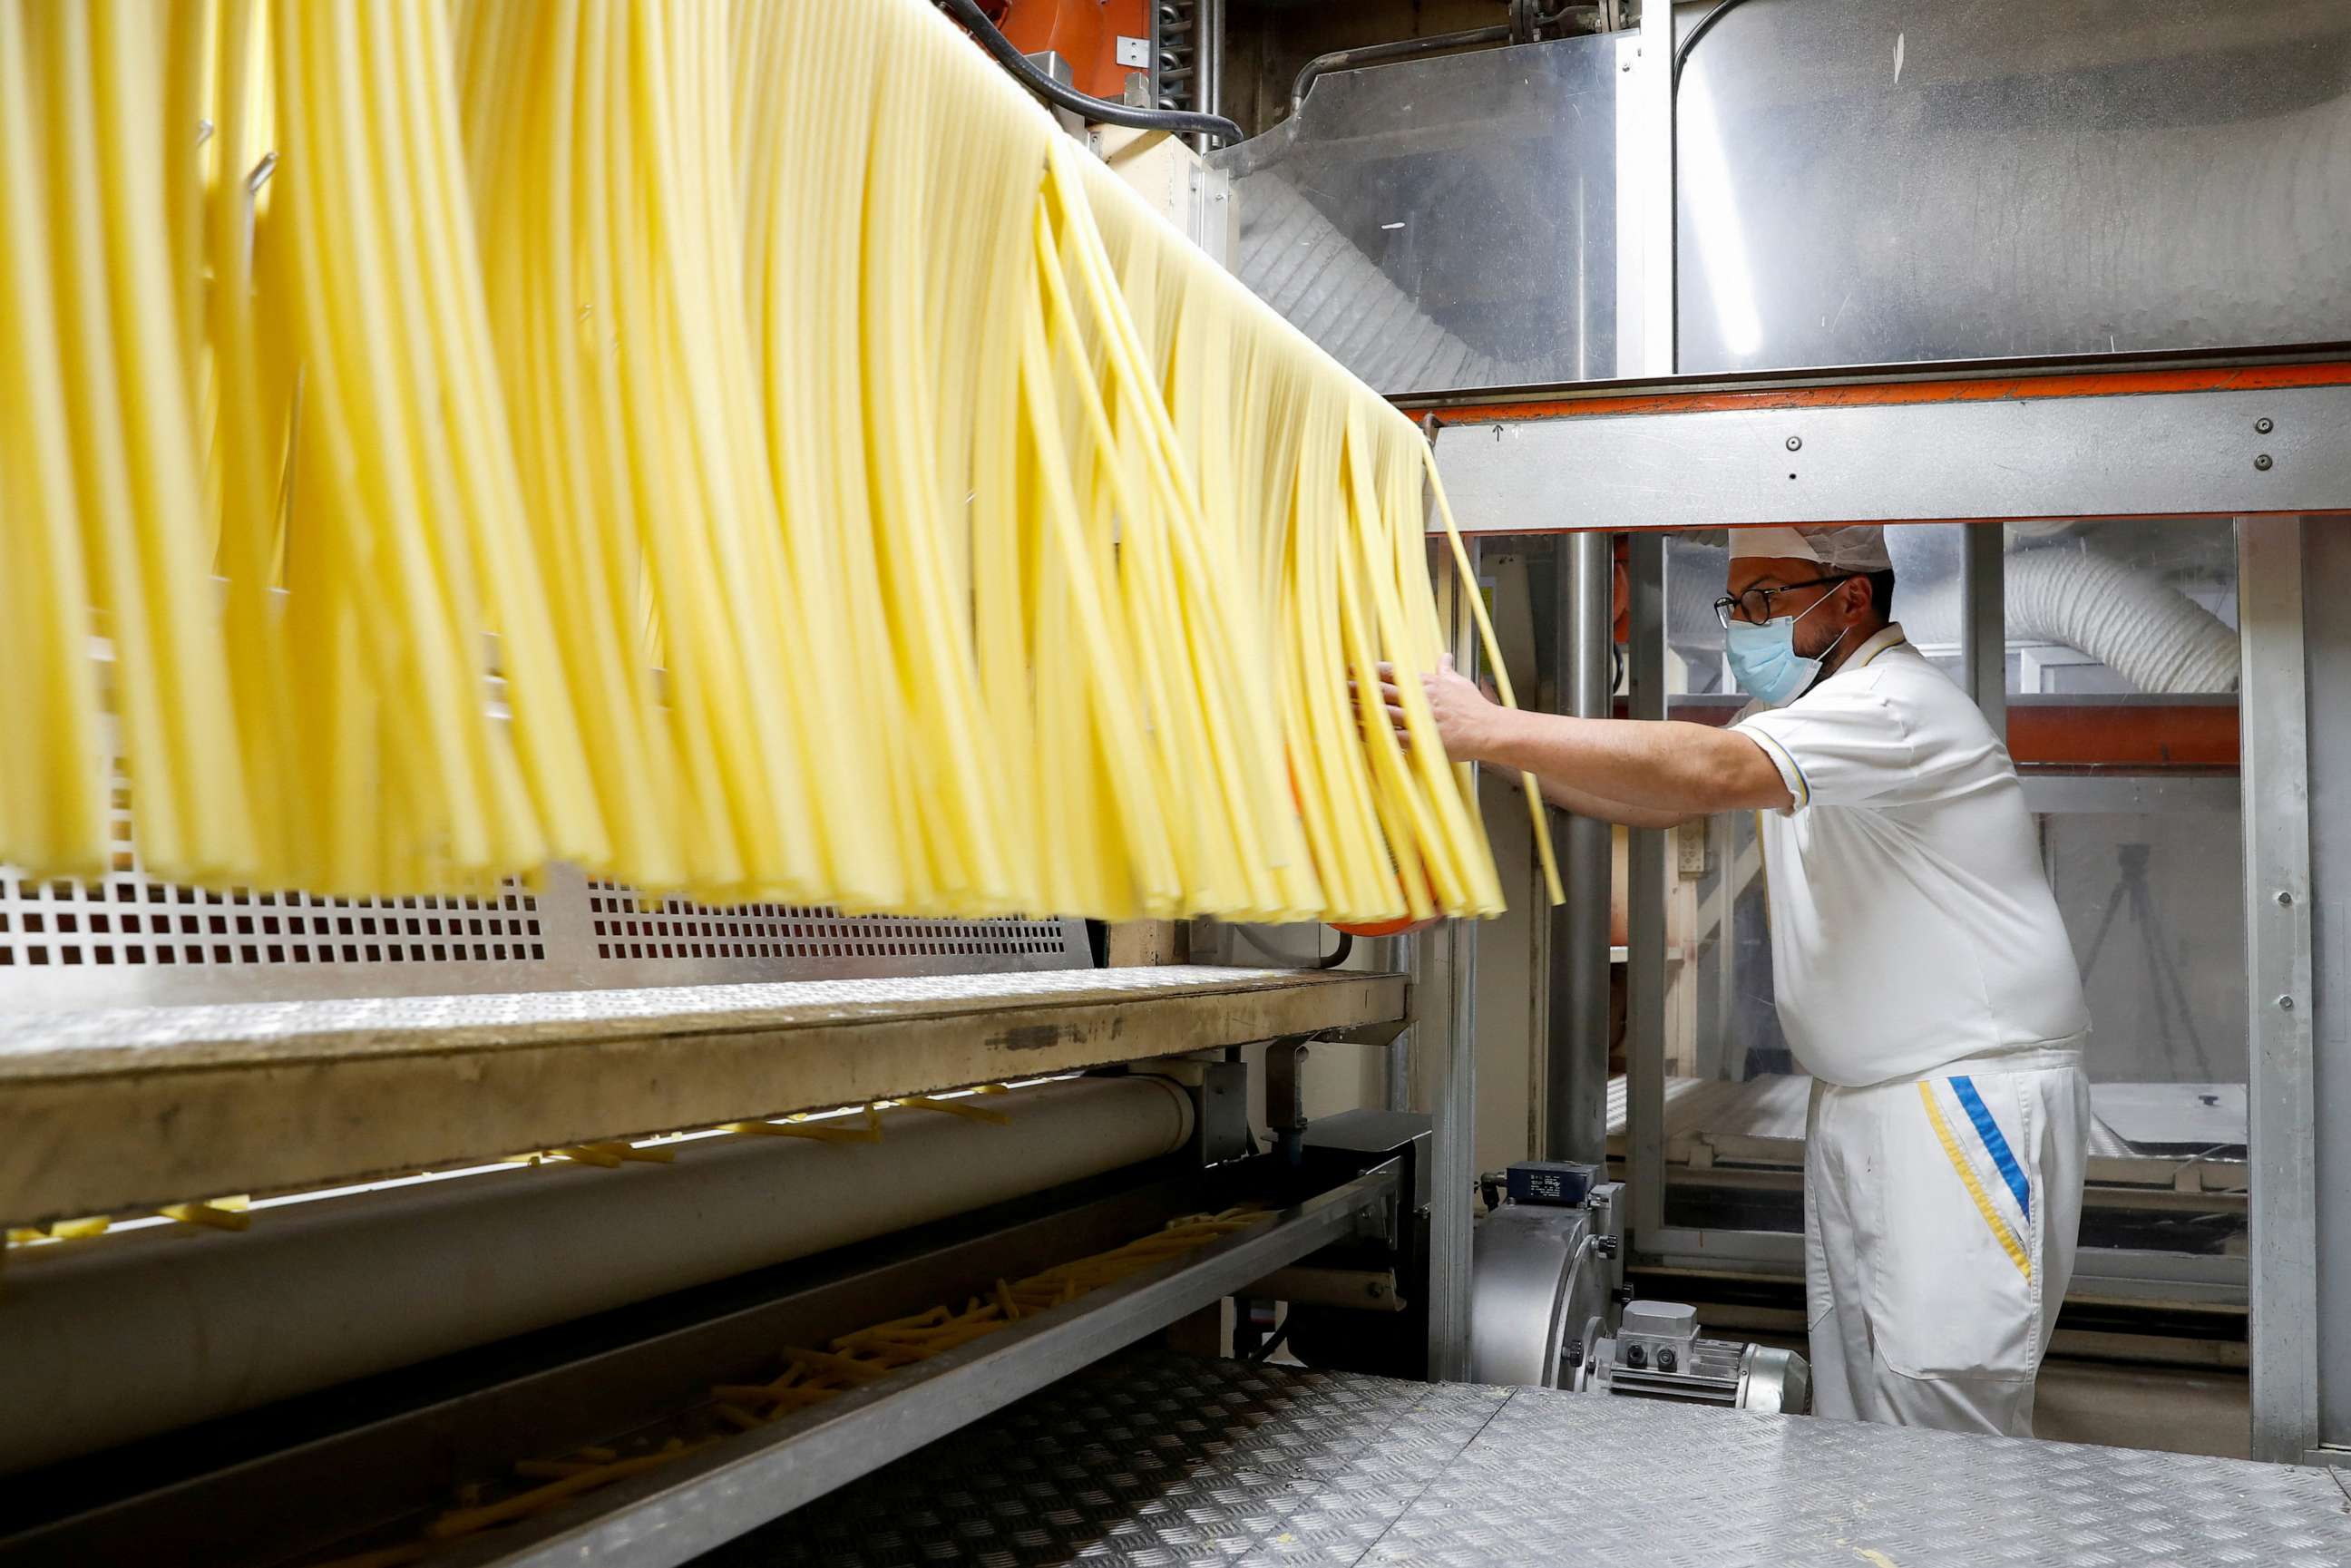 PHOTO: A worker at the Italian pasta maker De Cecco's factory prepares pasta in Fara San Martino, Italy, November 29, 2021.